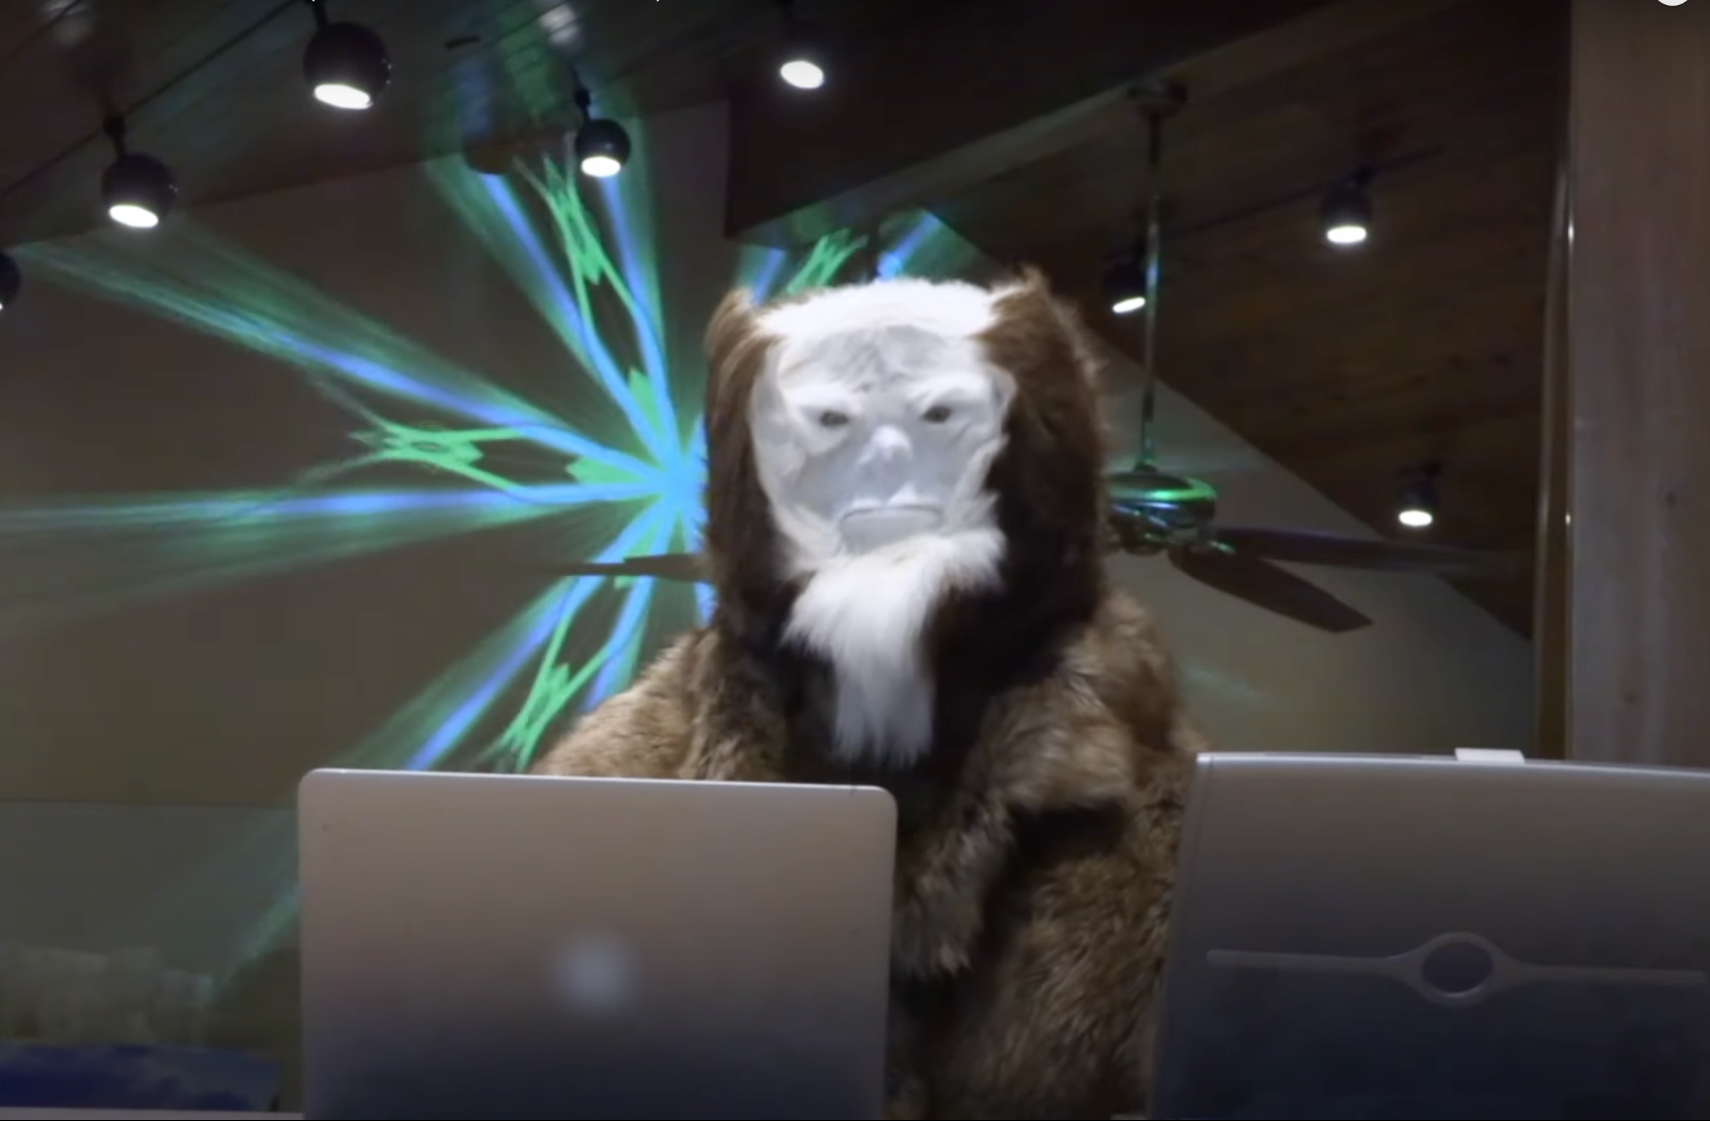 Bigfoot 'DJ Staunch' f/ Rapper Casanova Ace, Jeffrey Skunk Baxter and CJ Vanston in New Bigfoot 'DJ Staunch' Music Video